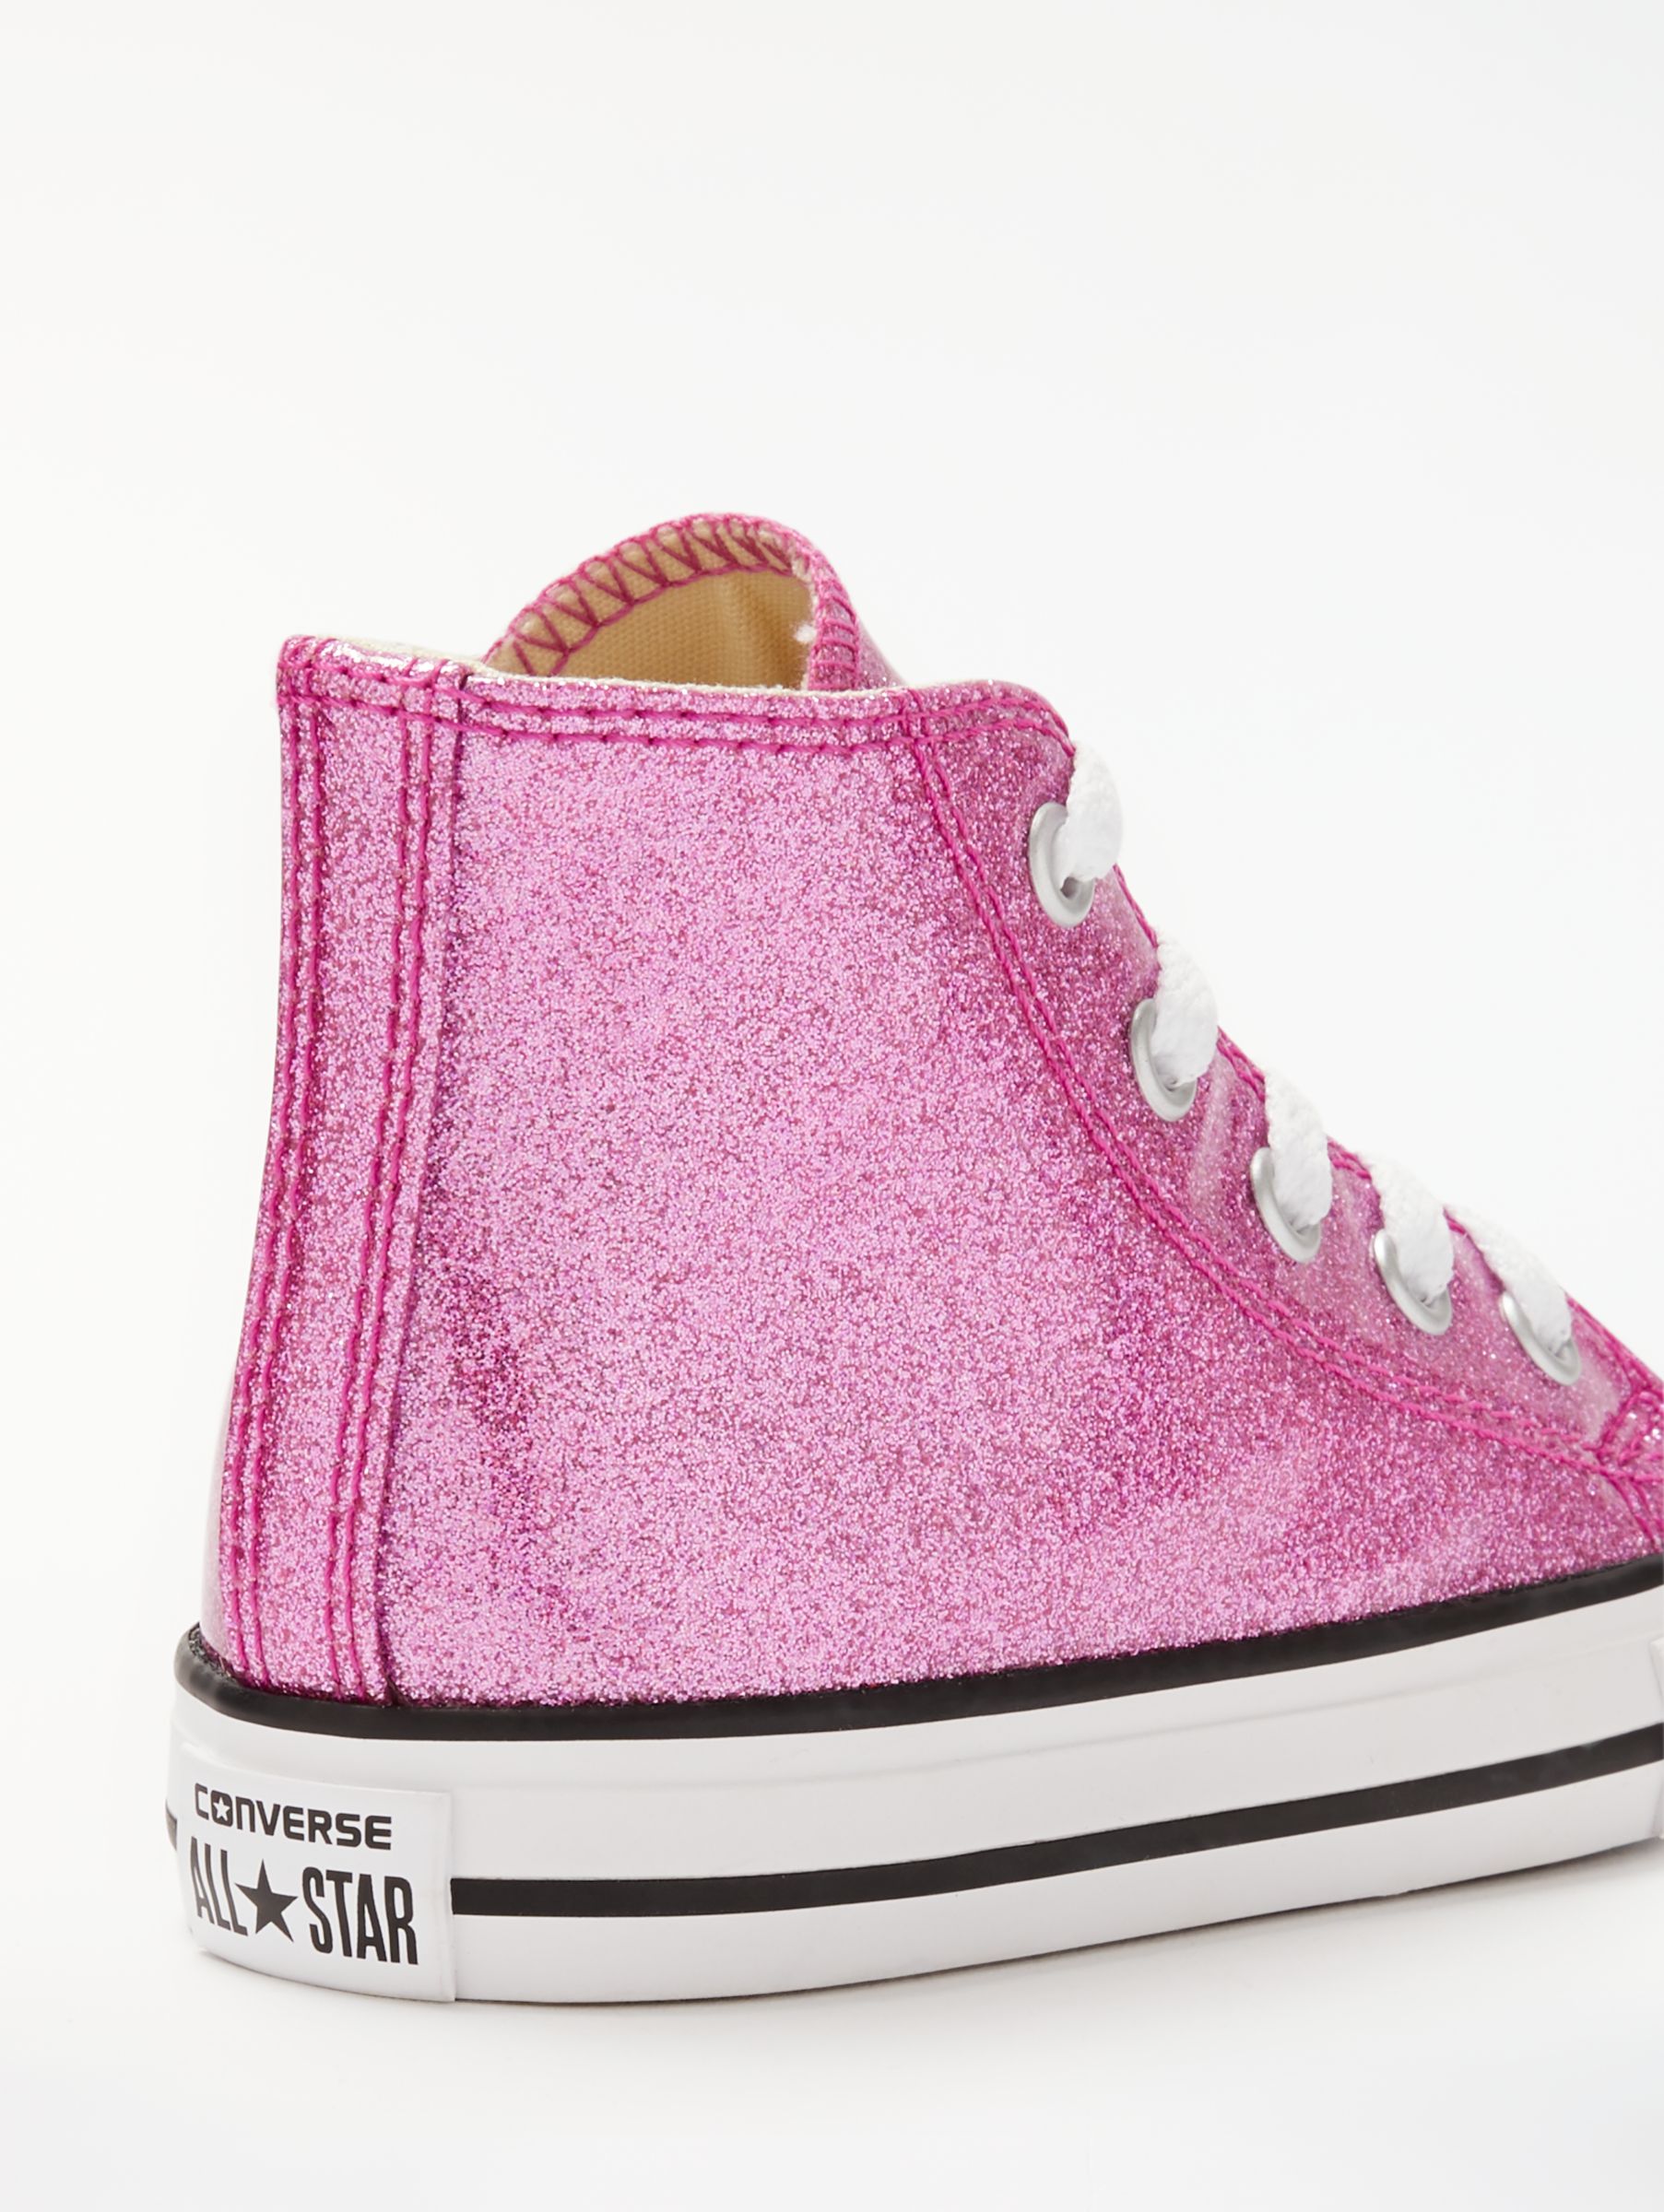 pink glitter converse size 